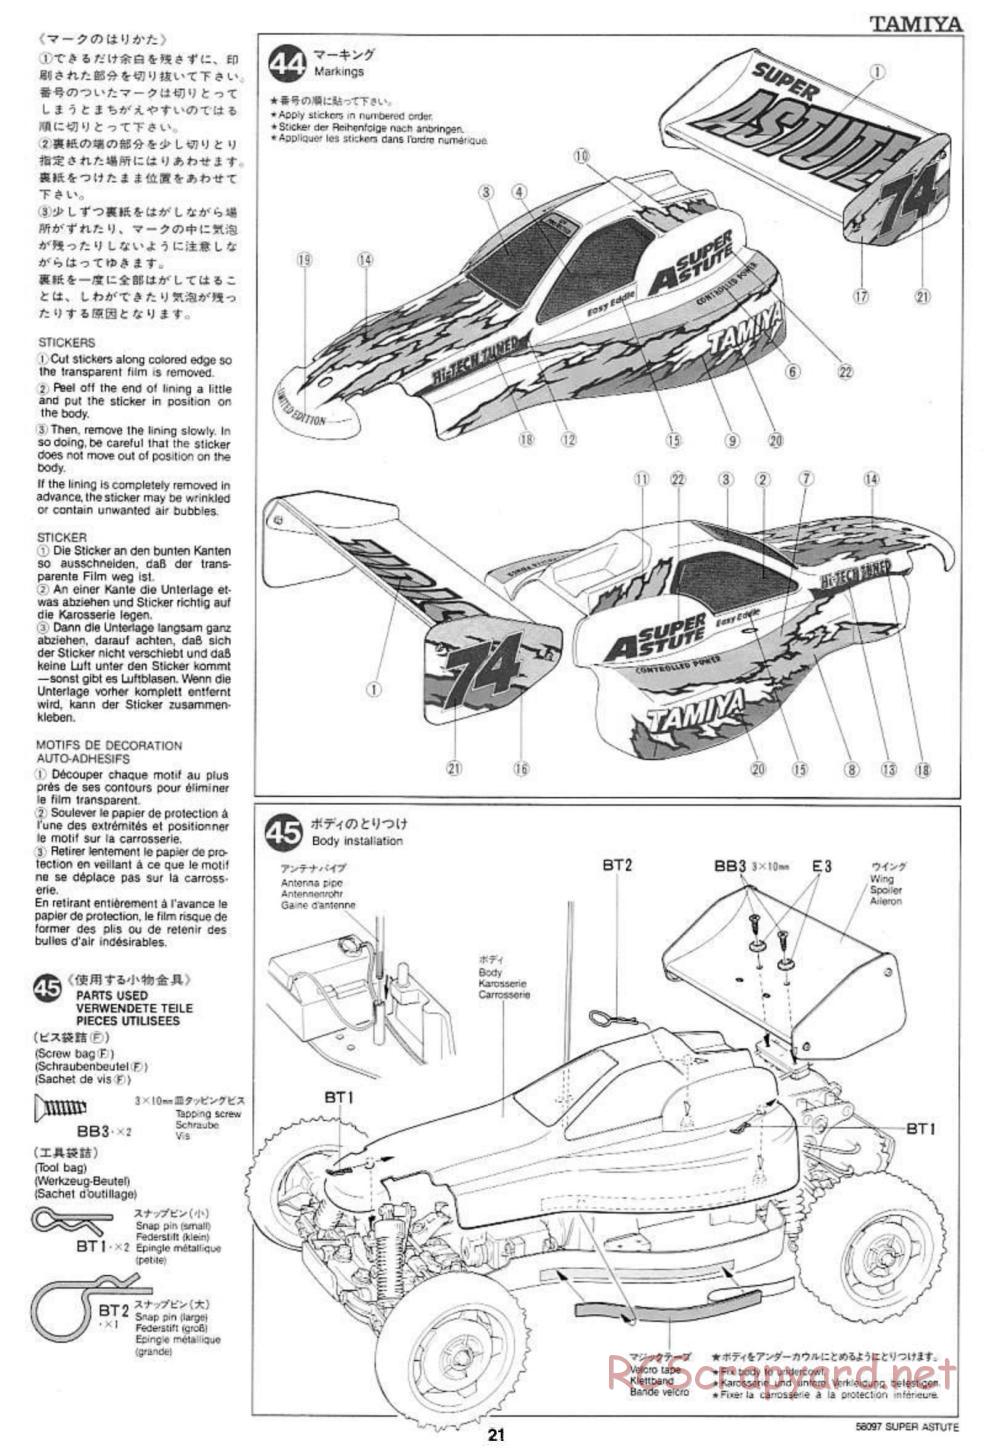 Tamiya - Super Astute - 58097 - Manual - Page 21